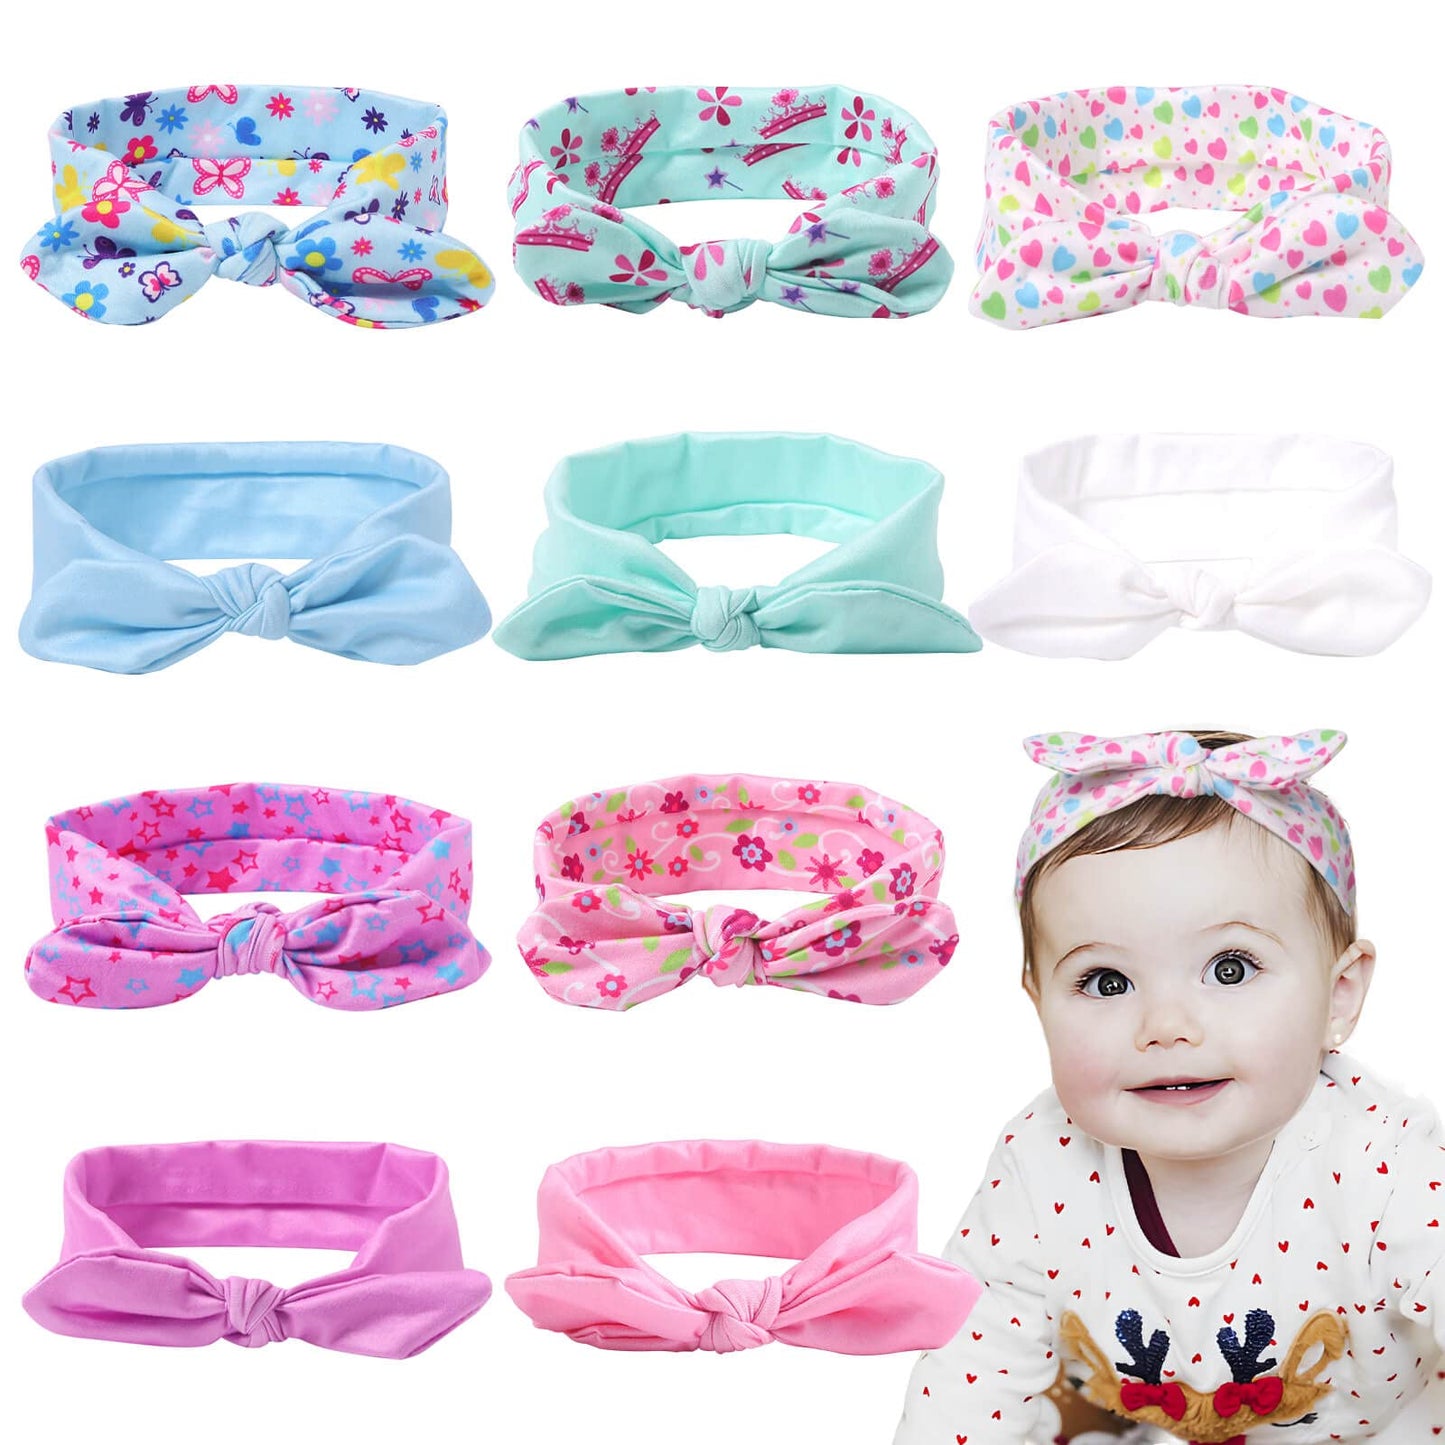 Rhoxshy 10 Pack Baby Girls Nylon Headbands Infants Hair Bows Hair Band Elastics Hair Accessories for Newborn Toddlers Kids